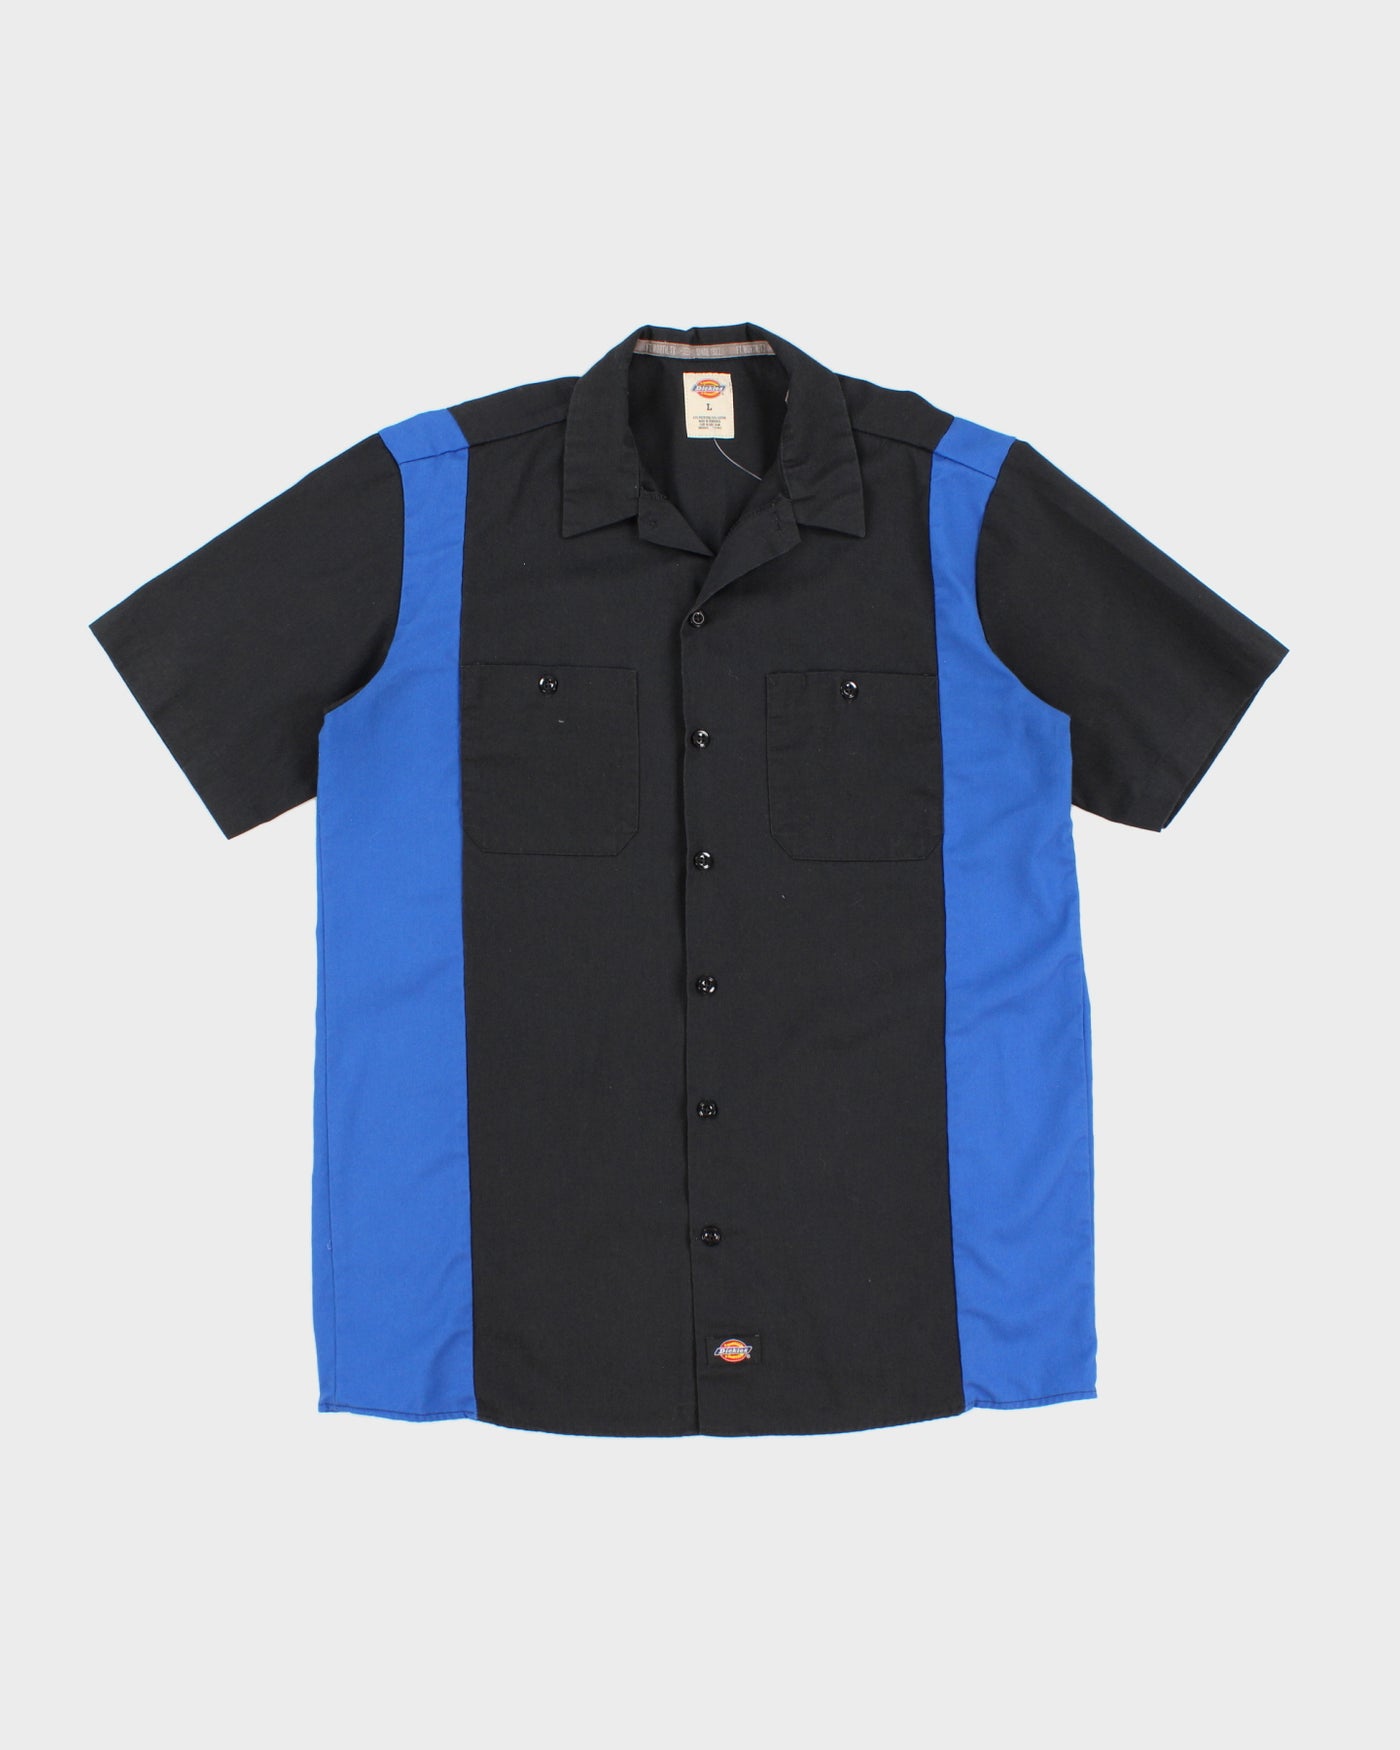 Dickies Mens Black & Blue Bowling Shirt - L